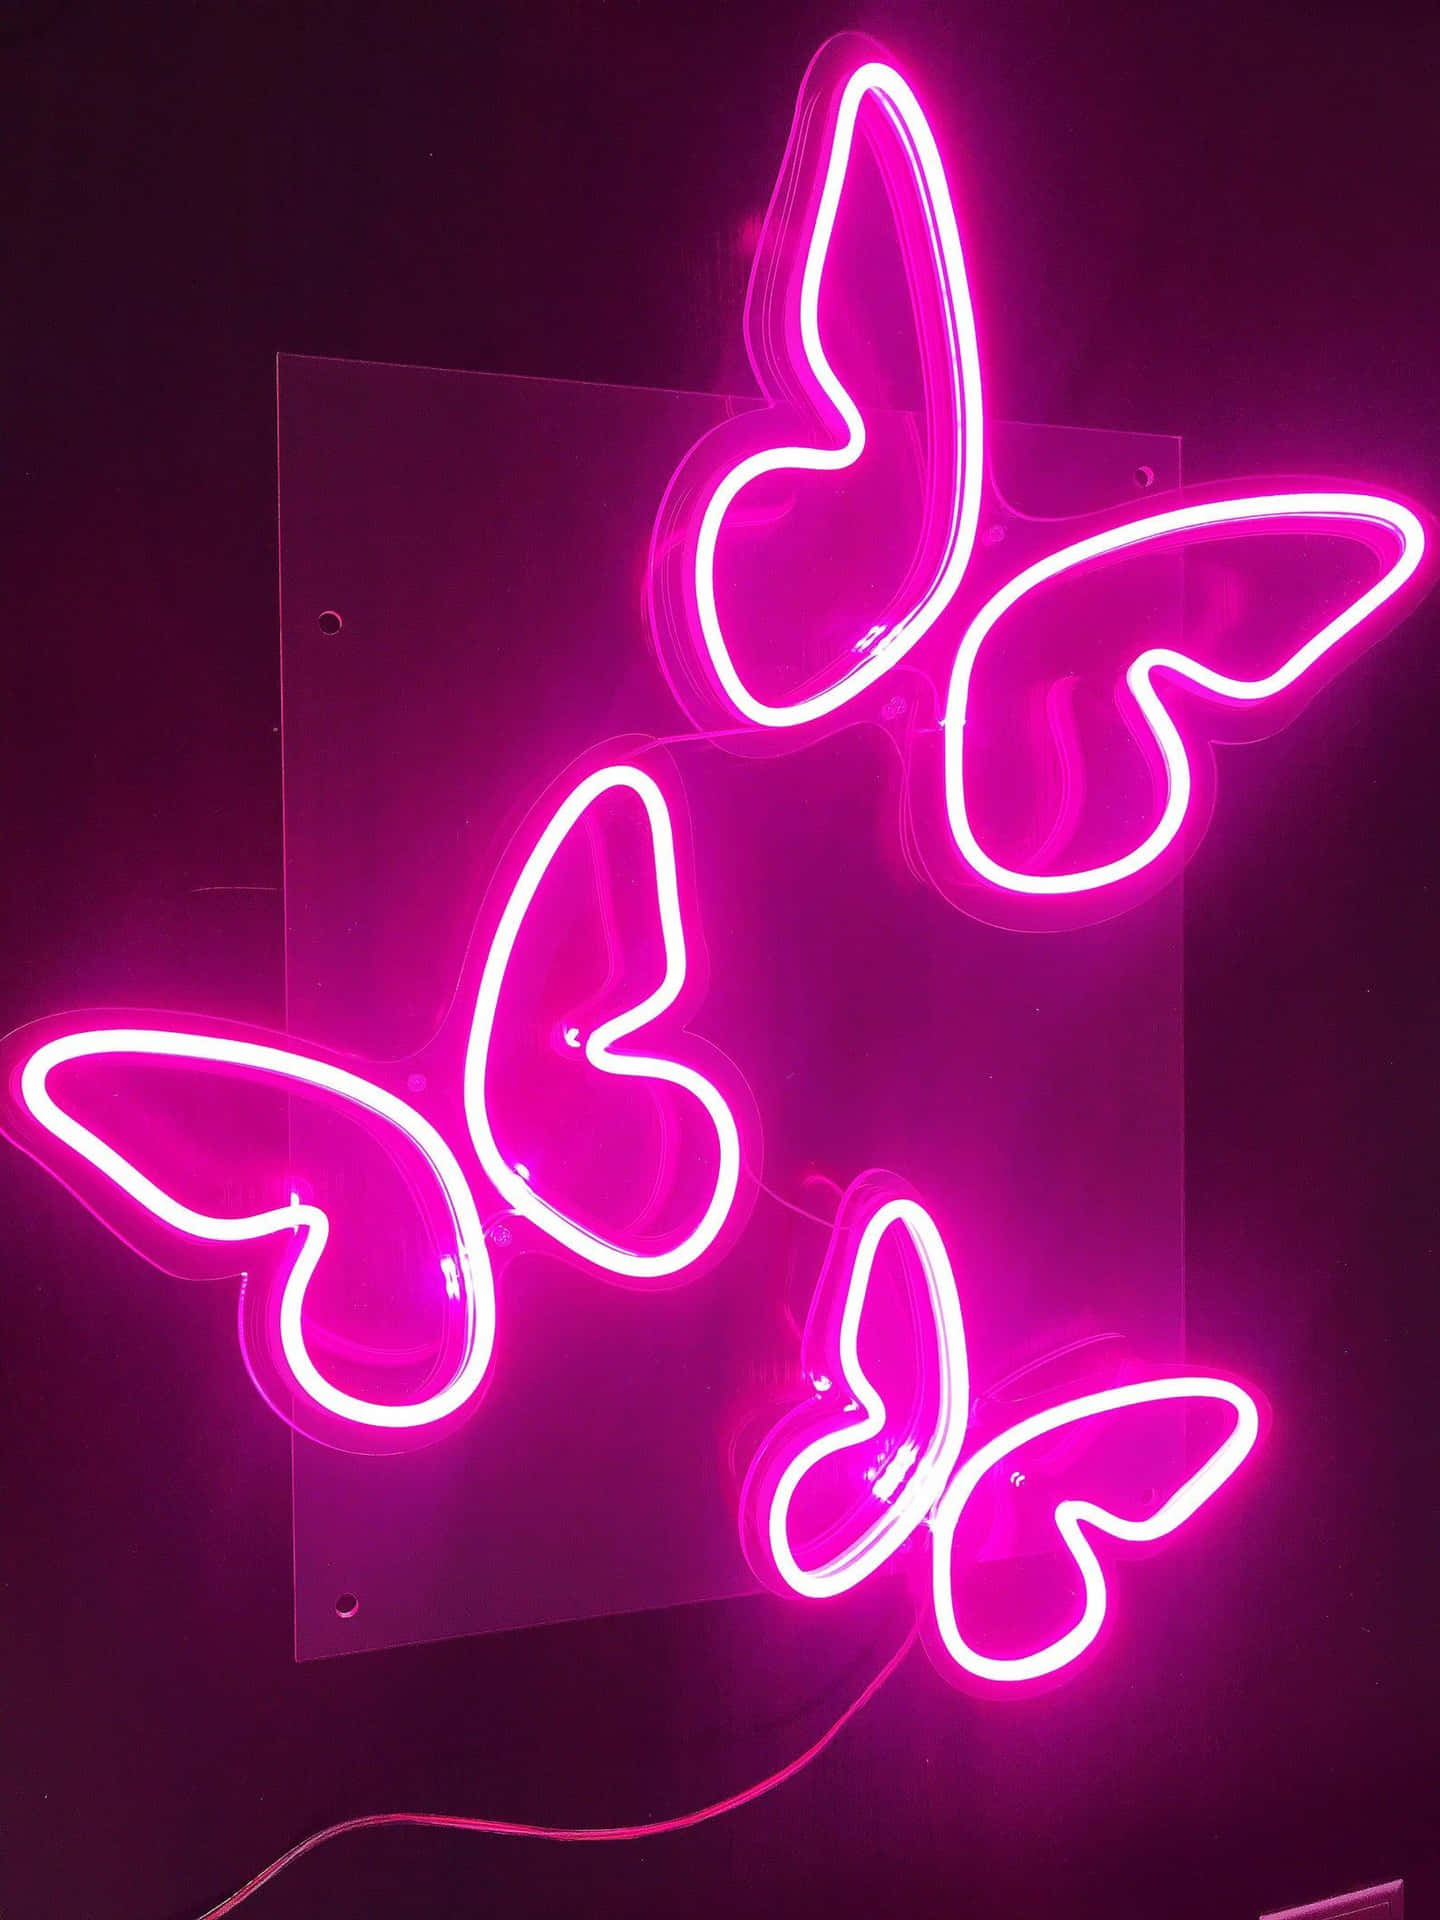 Simbolidi Farfalle Rosa Neon Carine. Sfondo